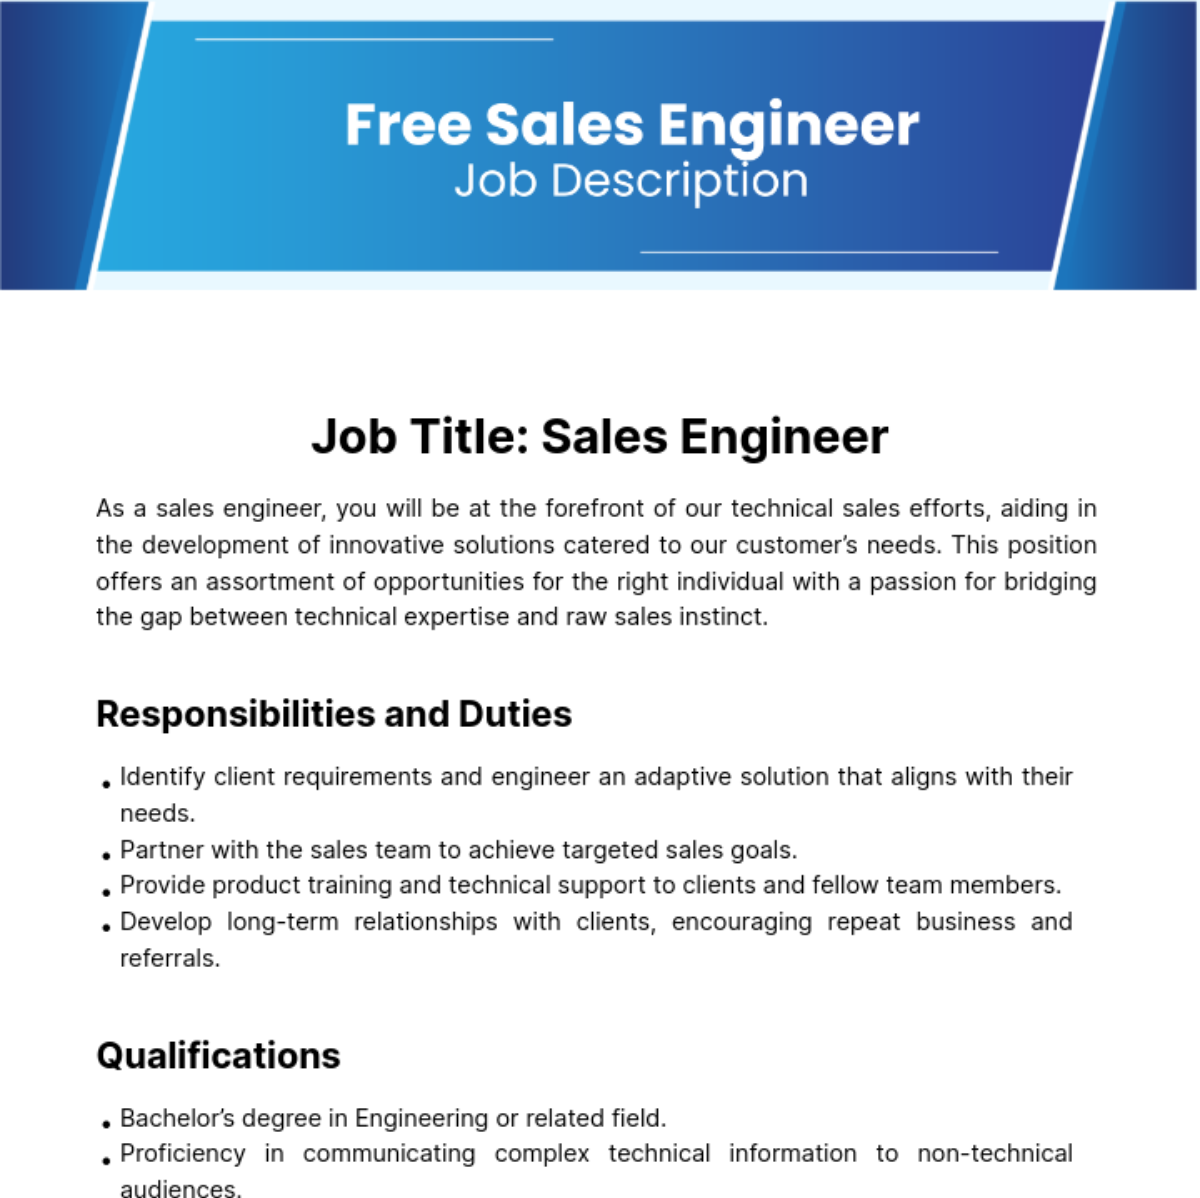 Free Sales Engineer Job Description Template